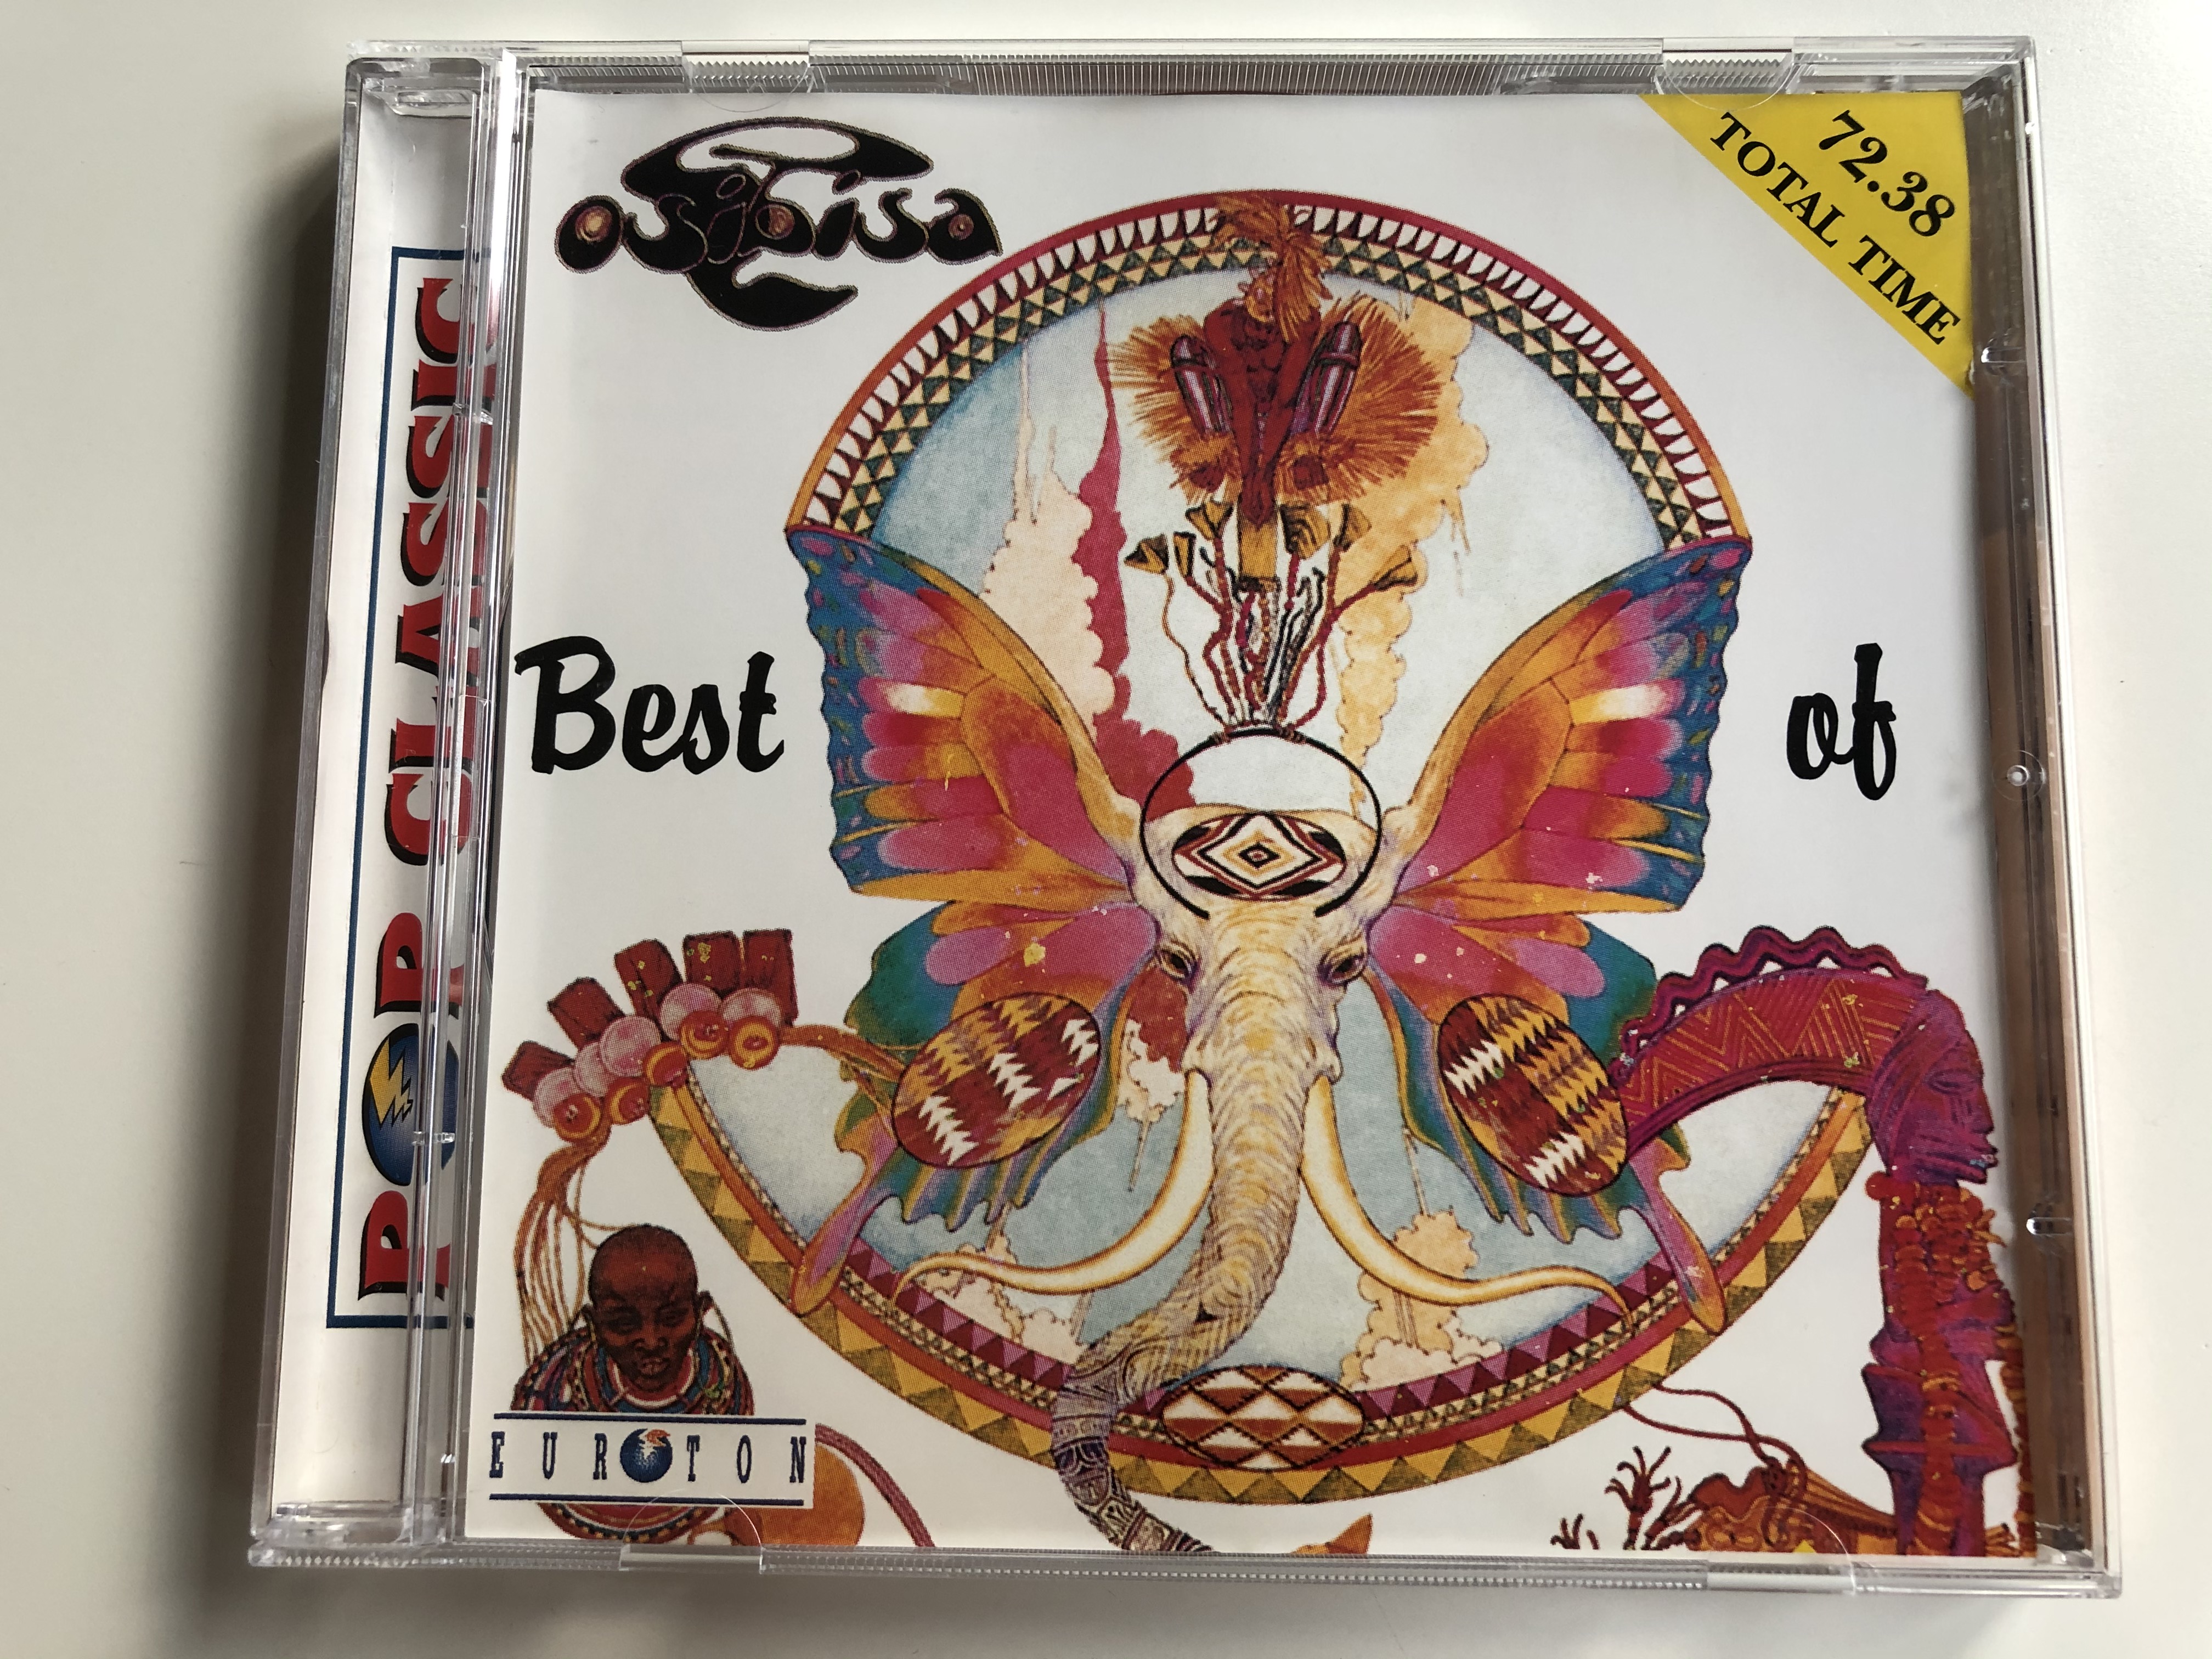 osibisa-best-of-euroton-audio-cd-eucd-0125-1-.jpg